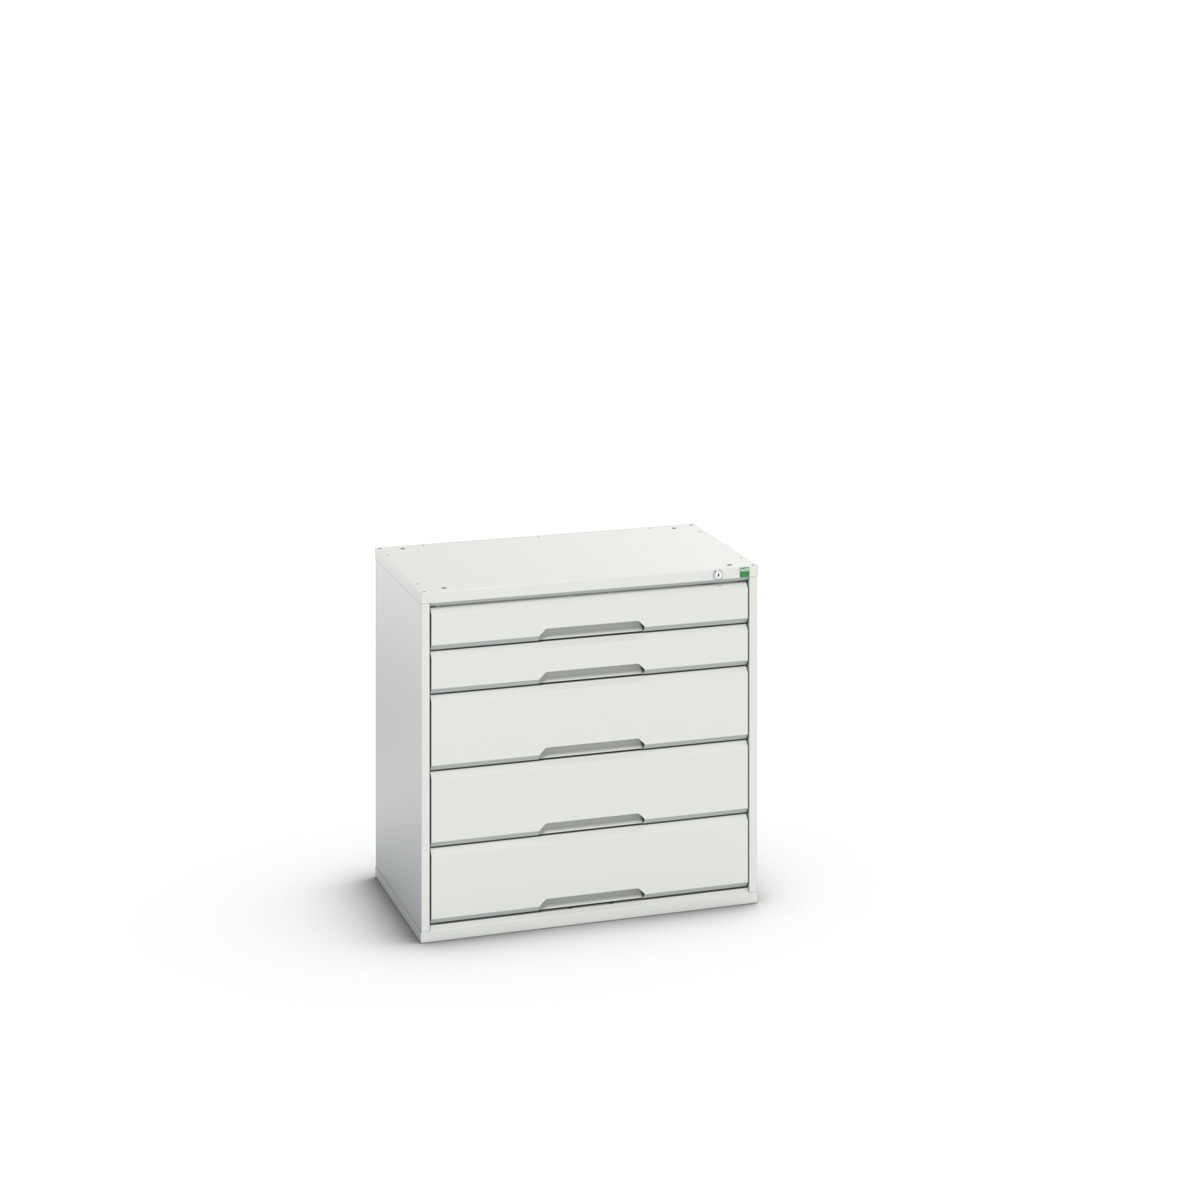 16925412.16 - verso drawer cabinet